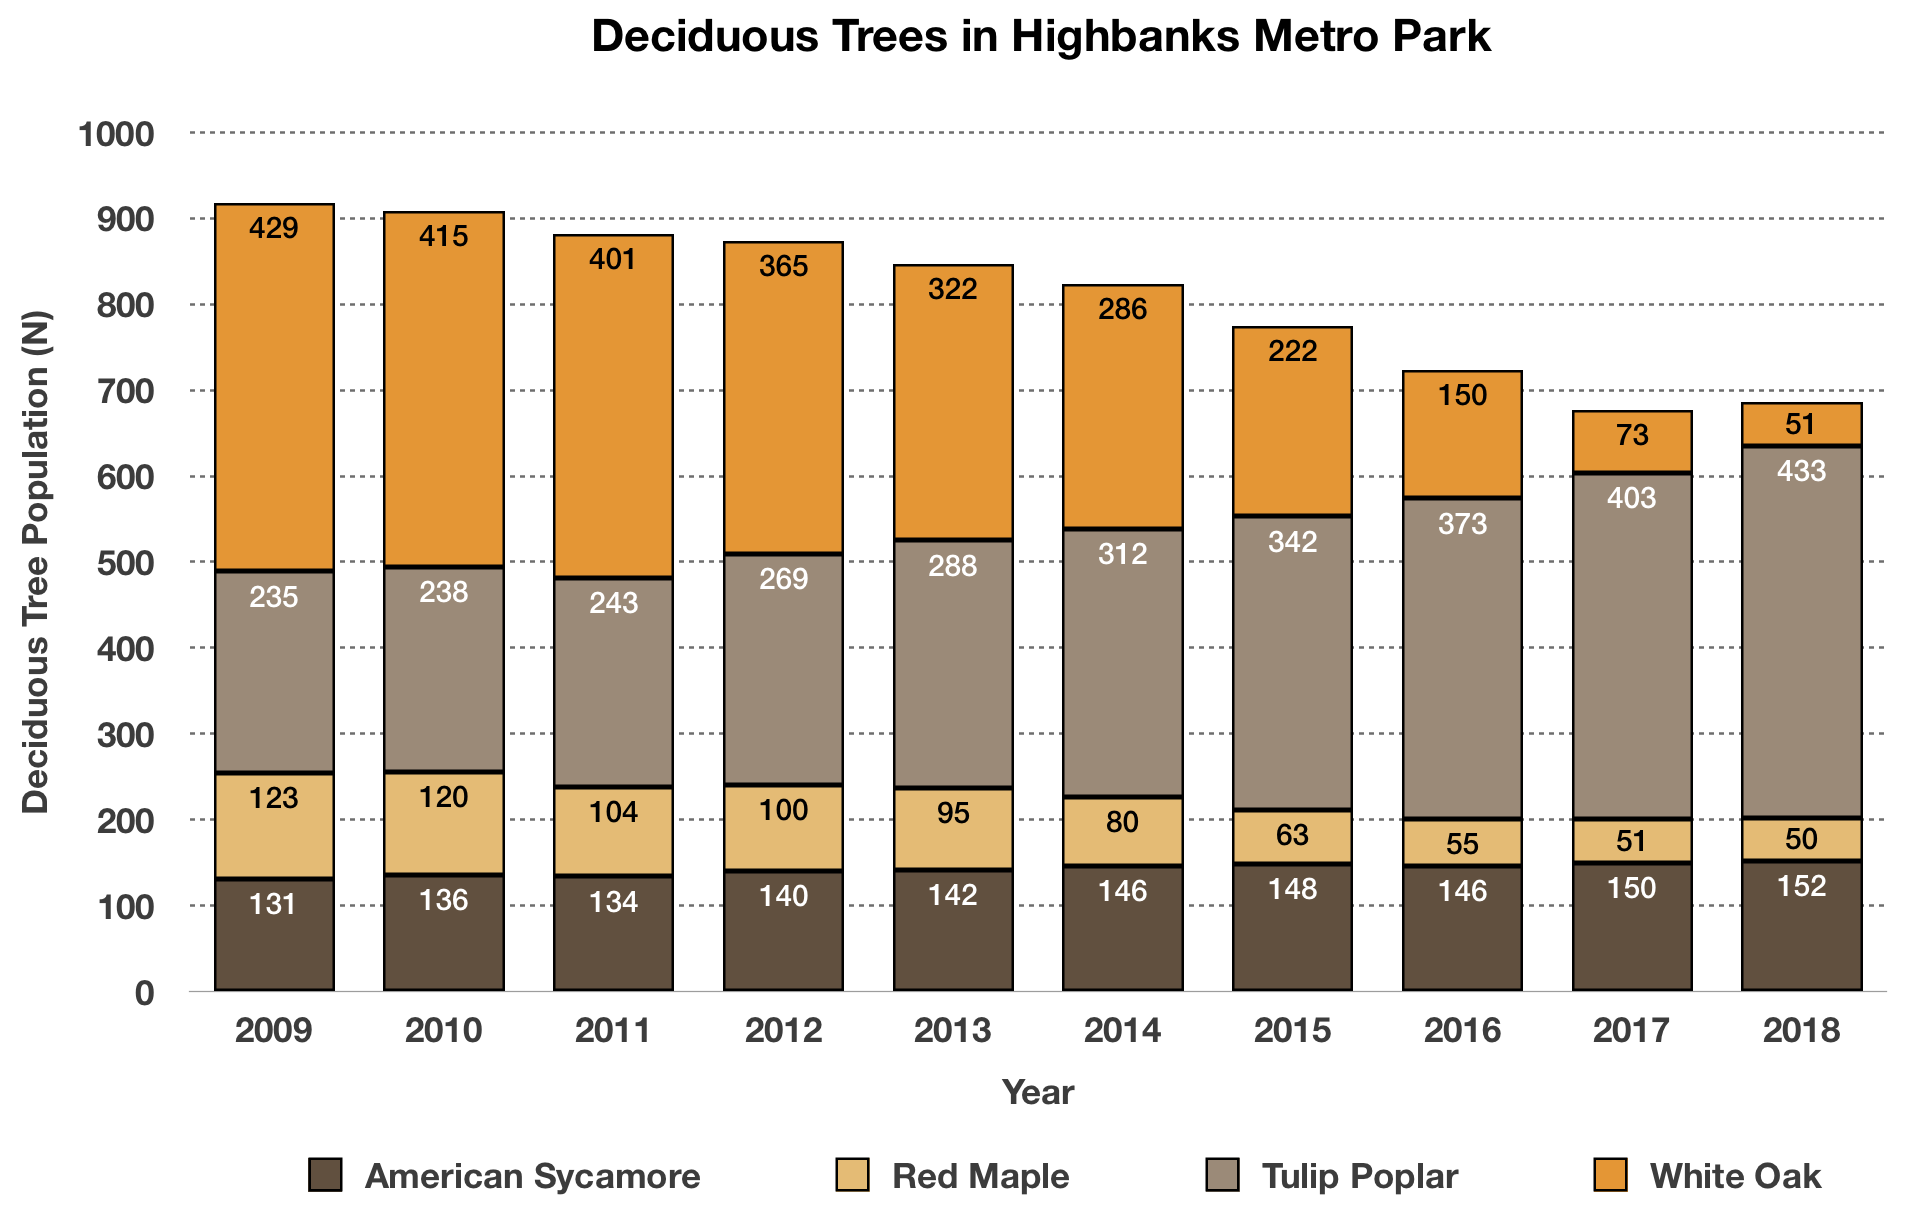 bar graph showing deciduous trees in Highbanks Metro Park